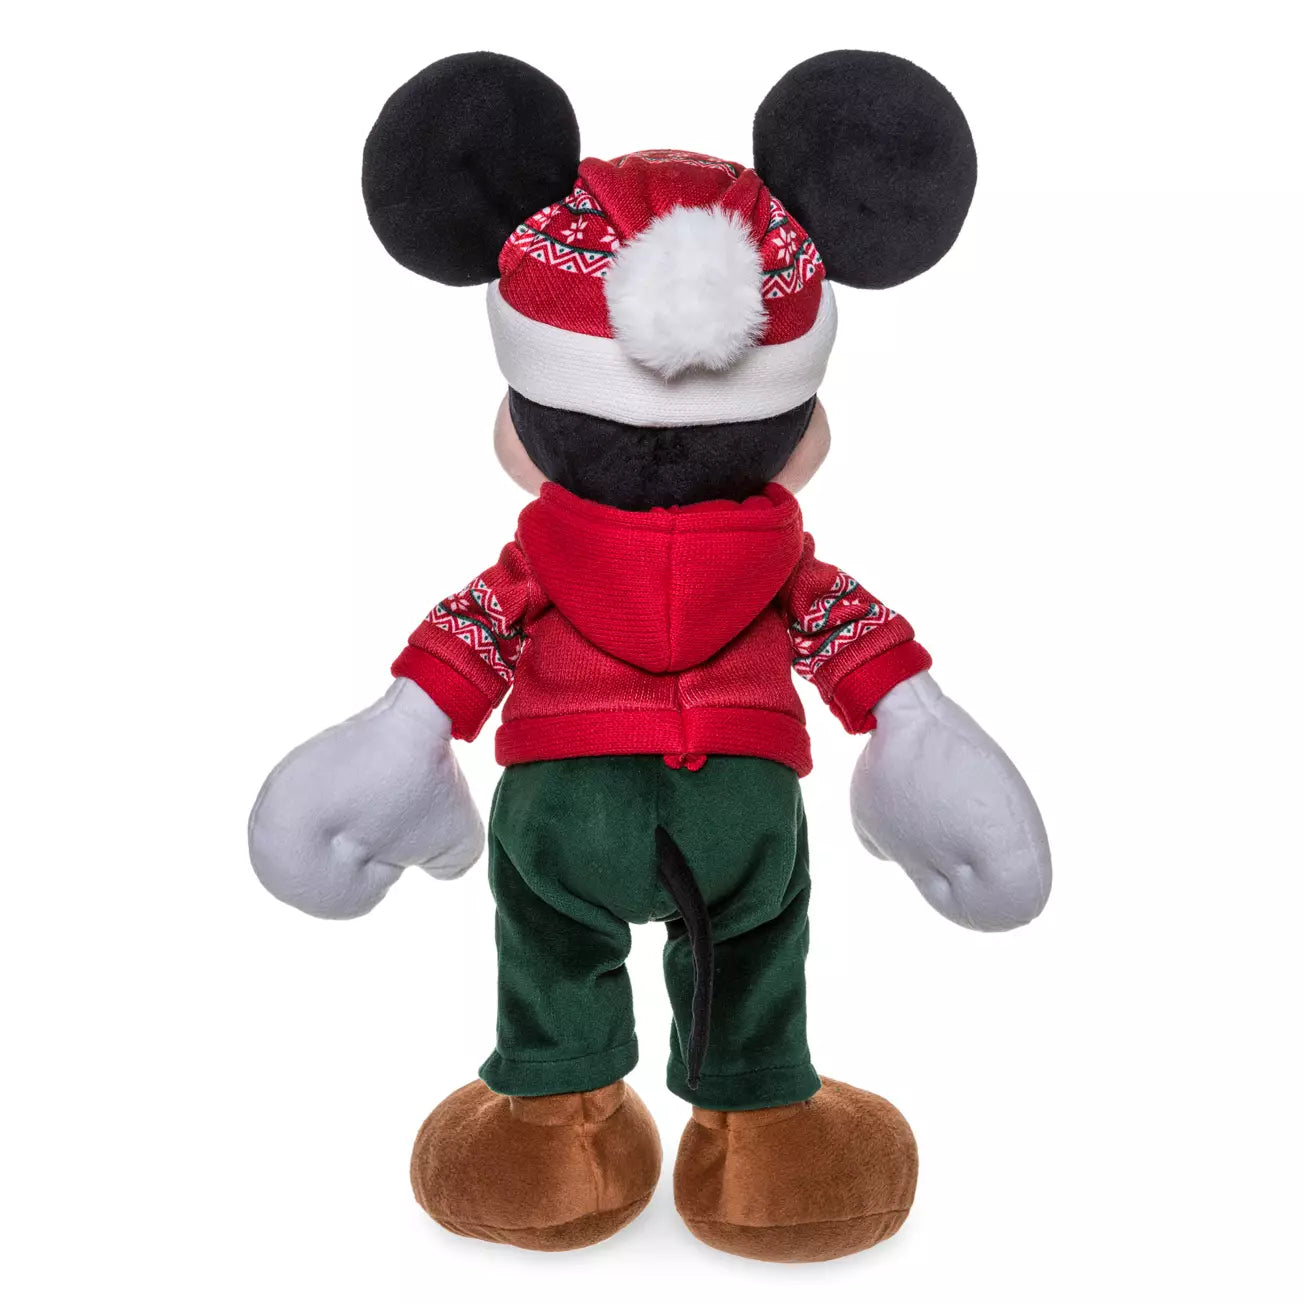 “Pre-order” HKDL - Mickey Mouse Holiday Medium Plush